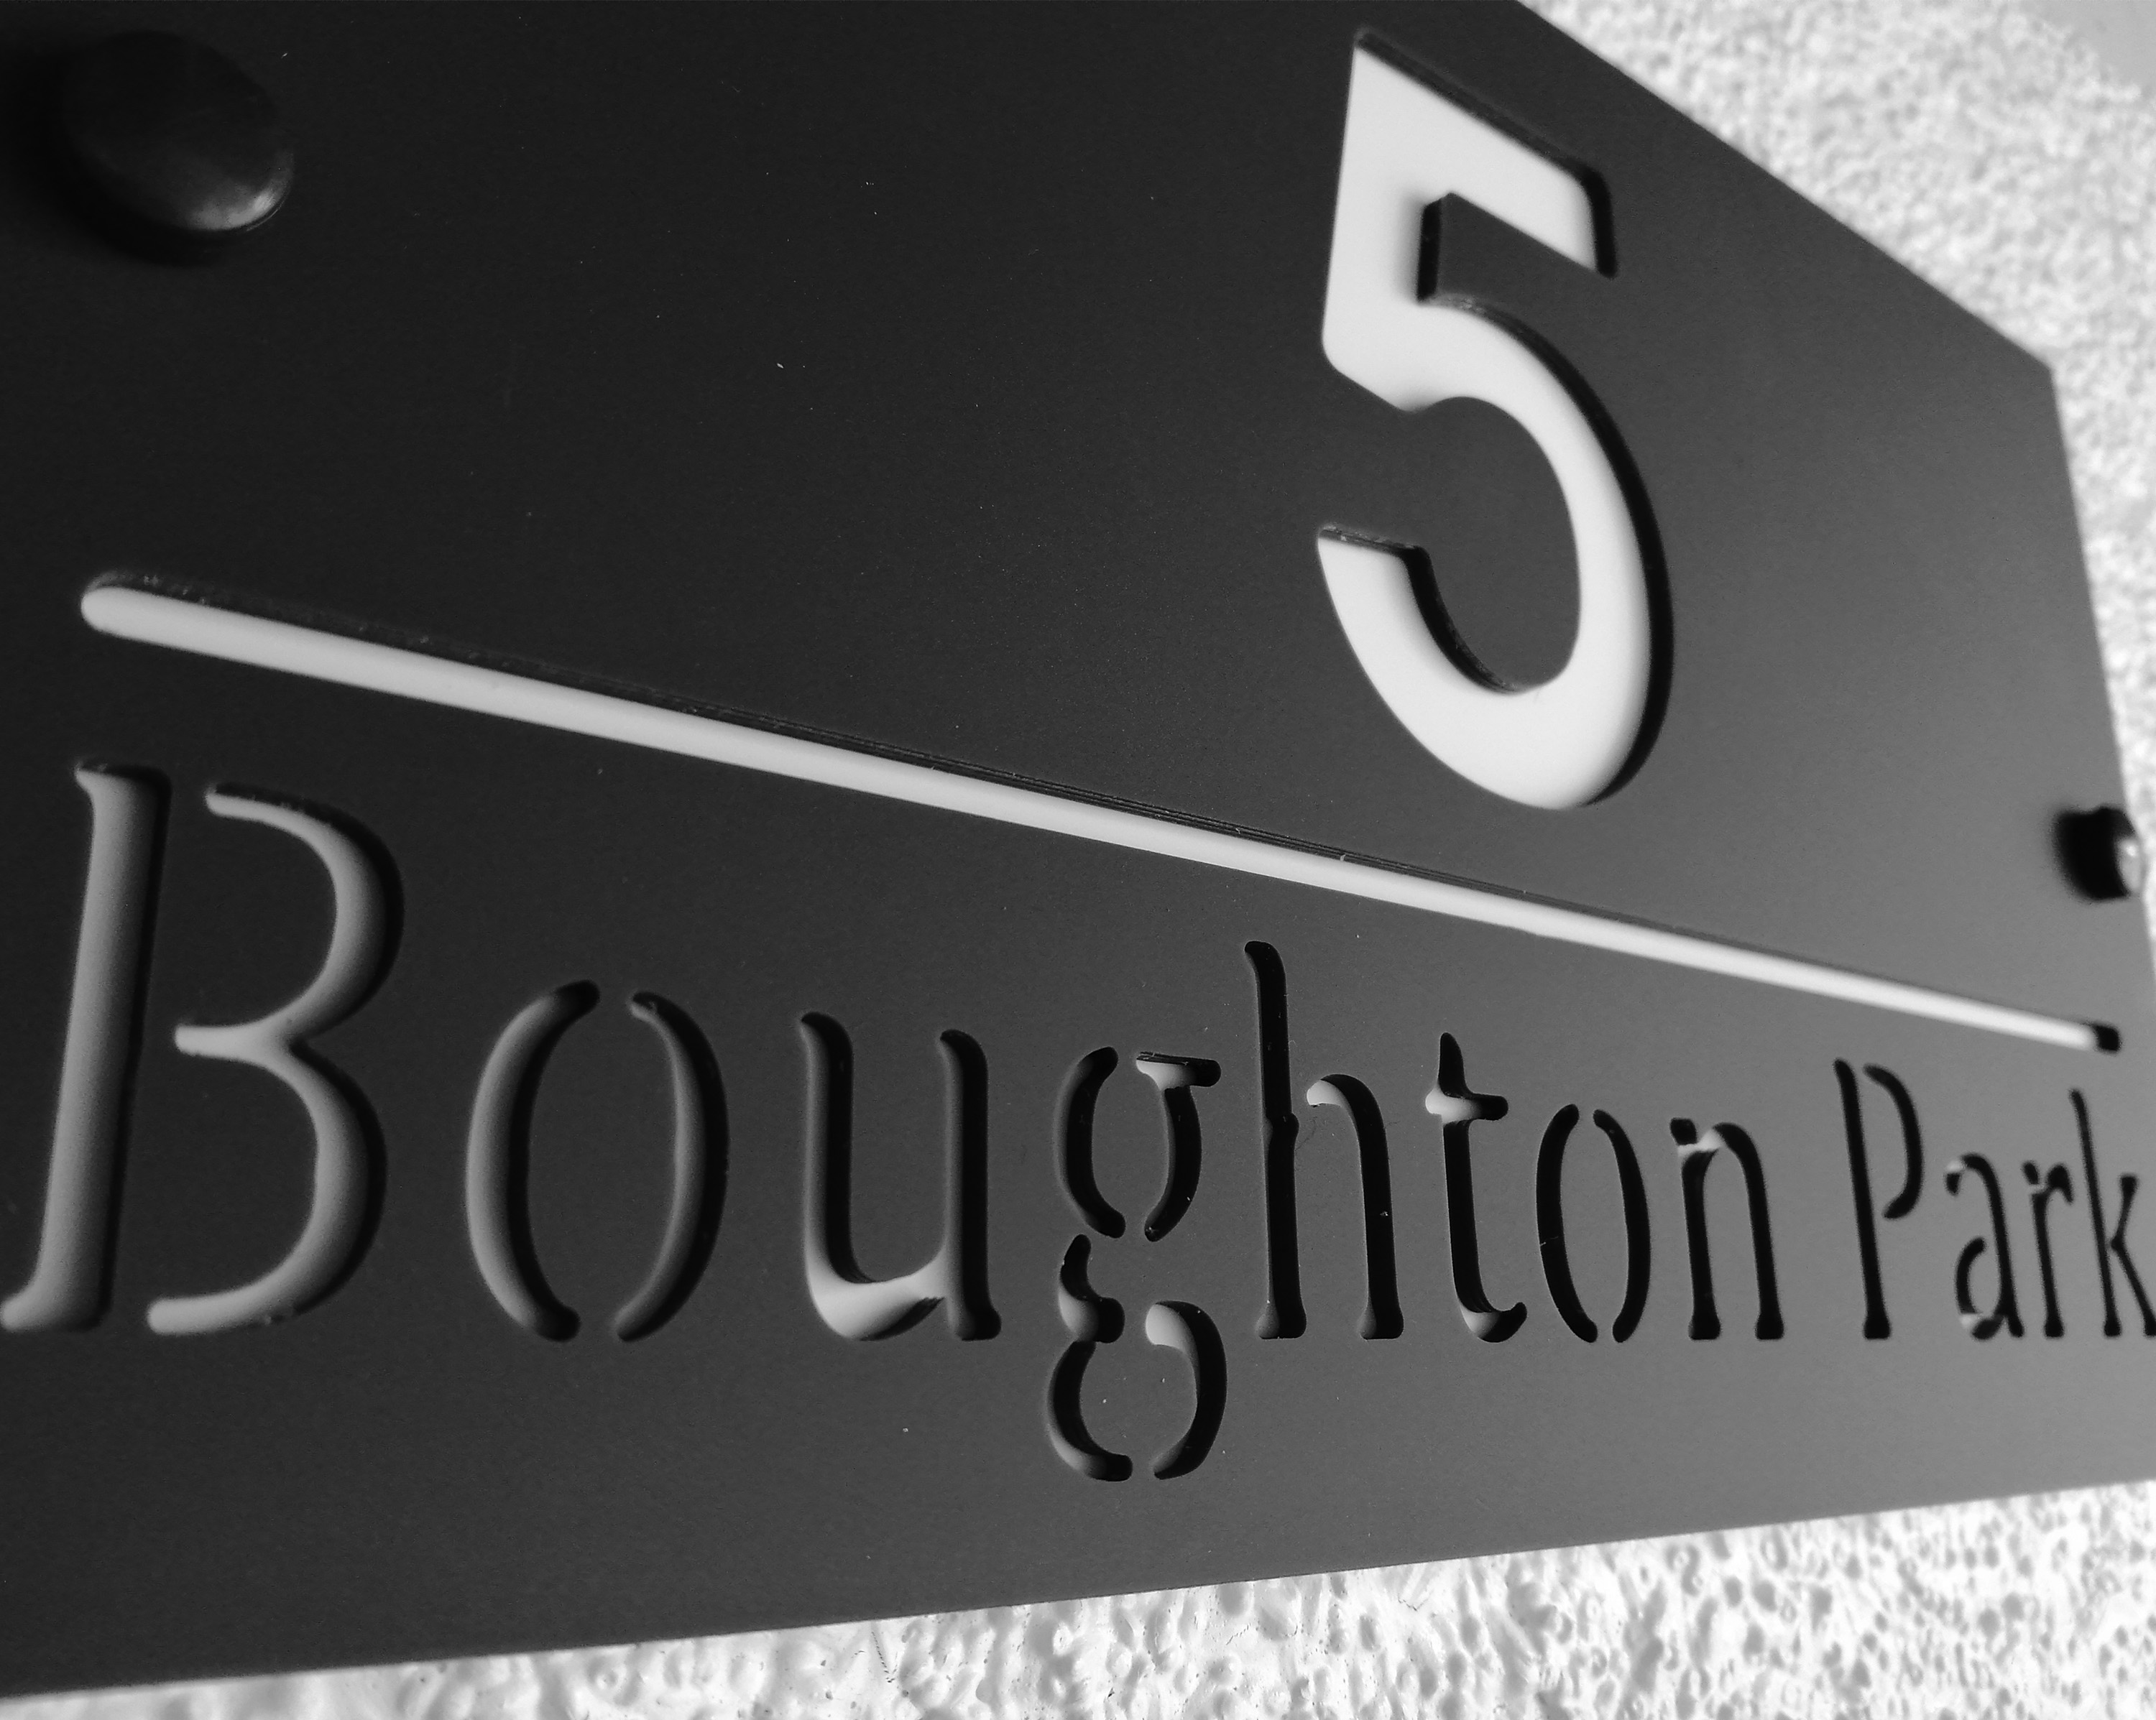 5 Boughton Park Close up